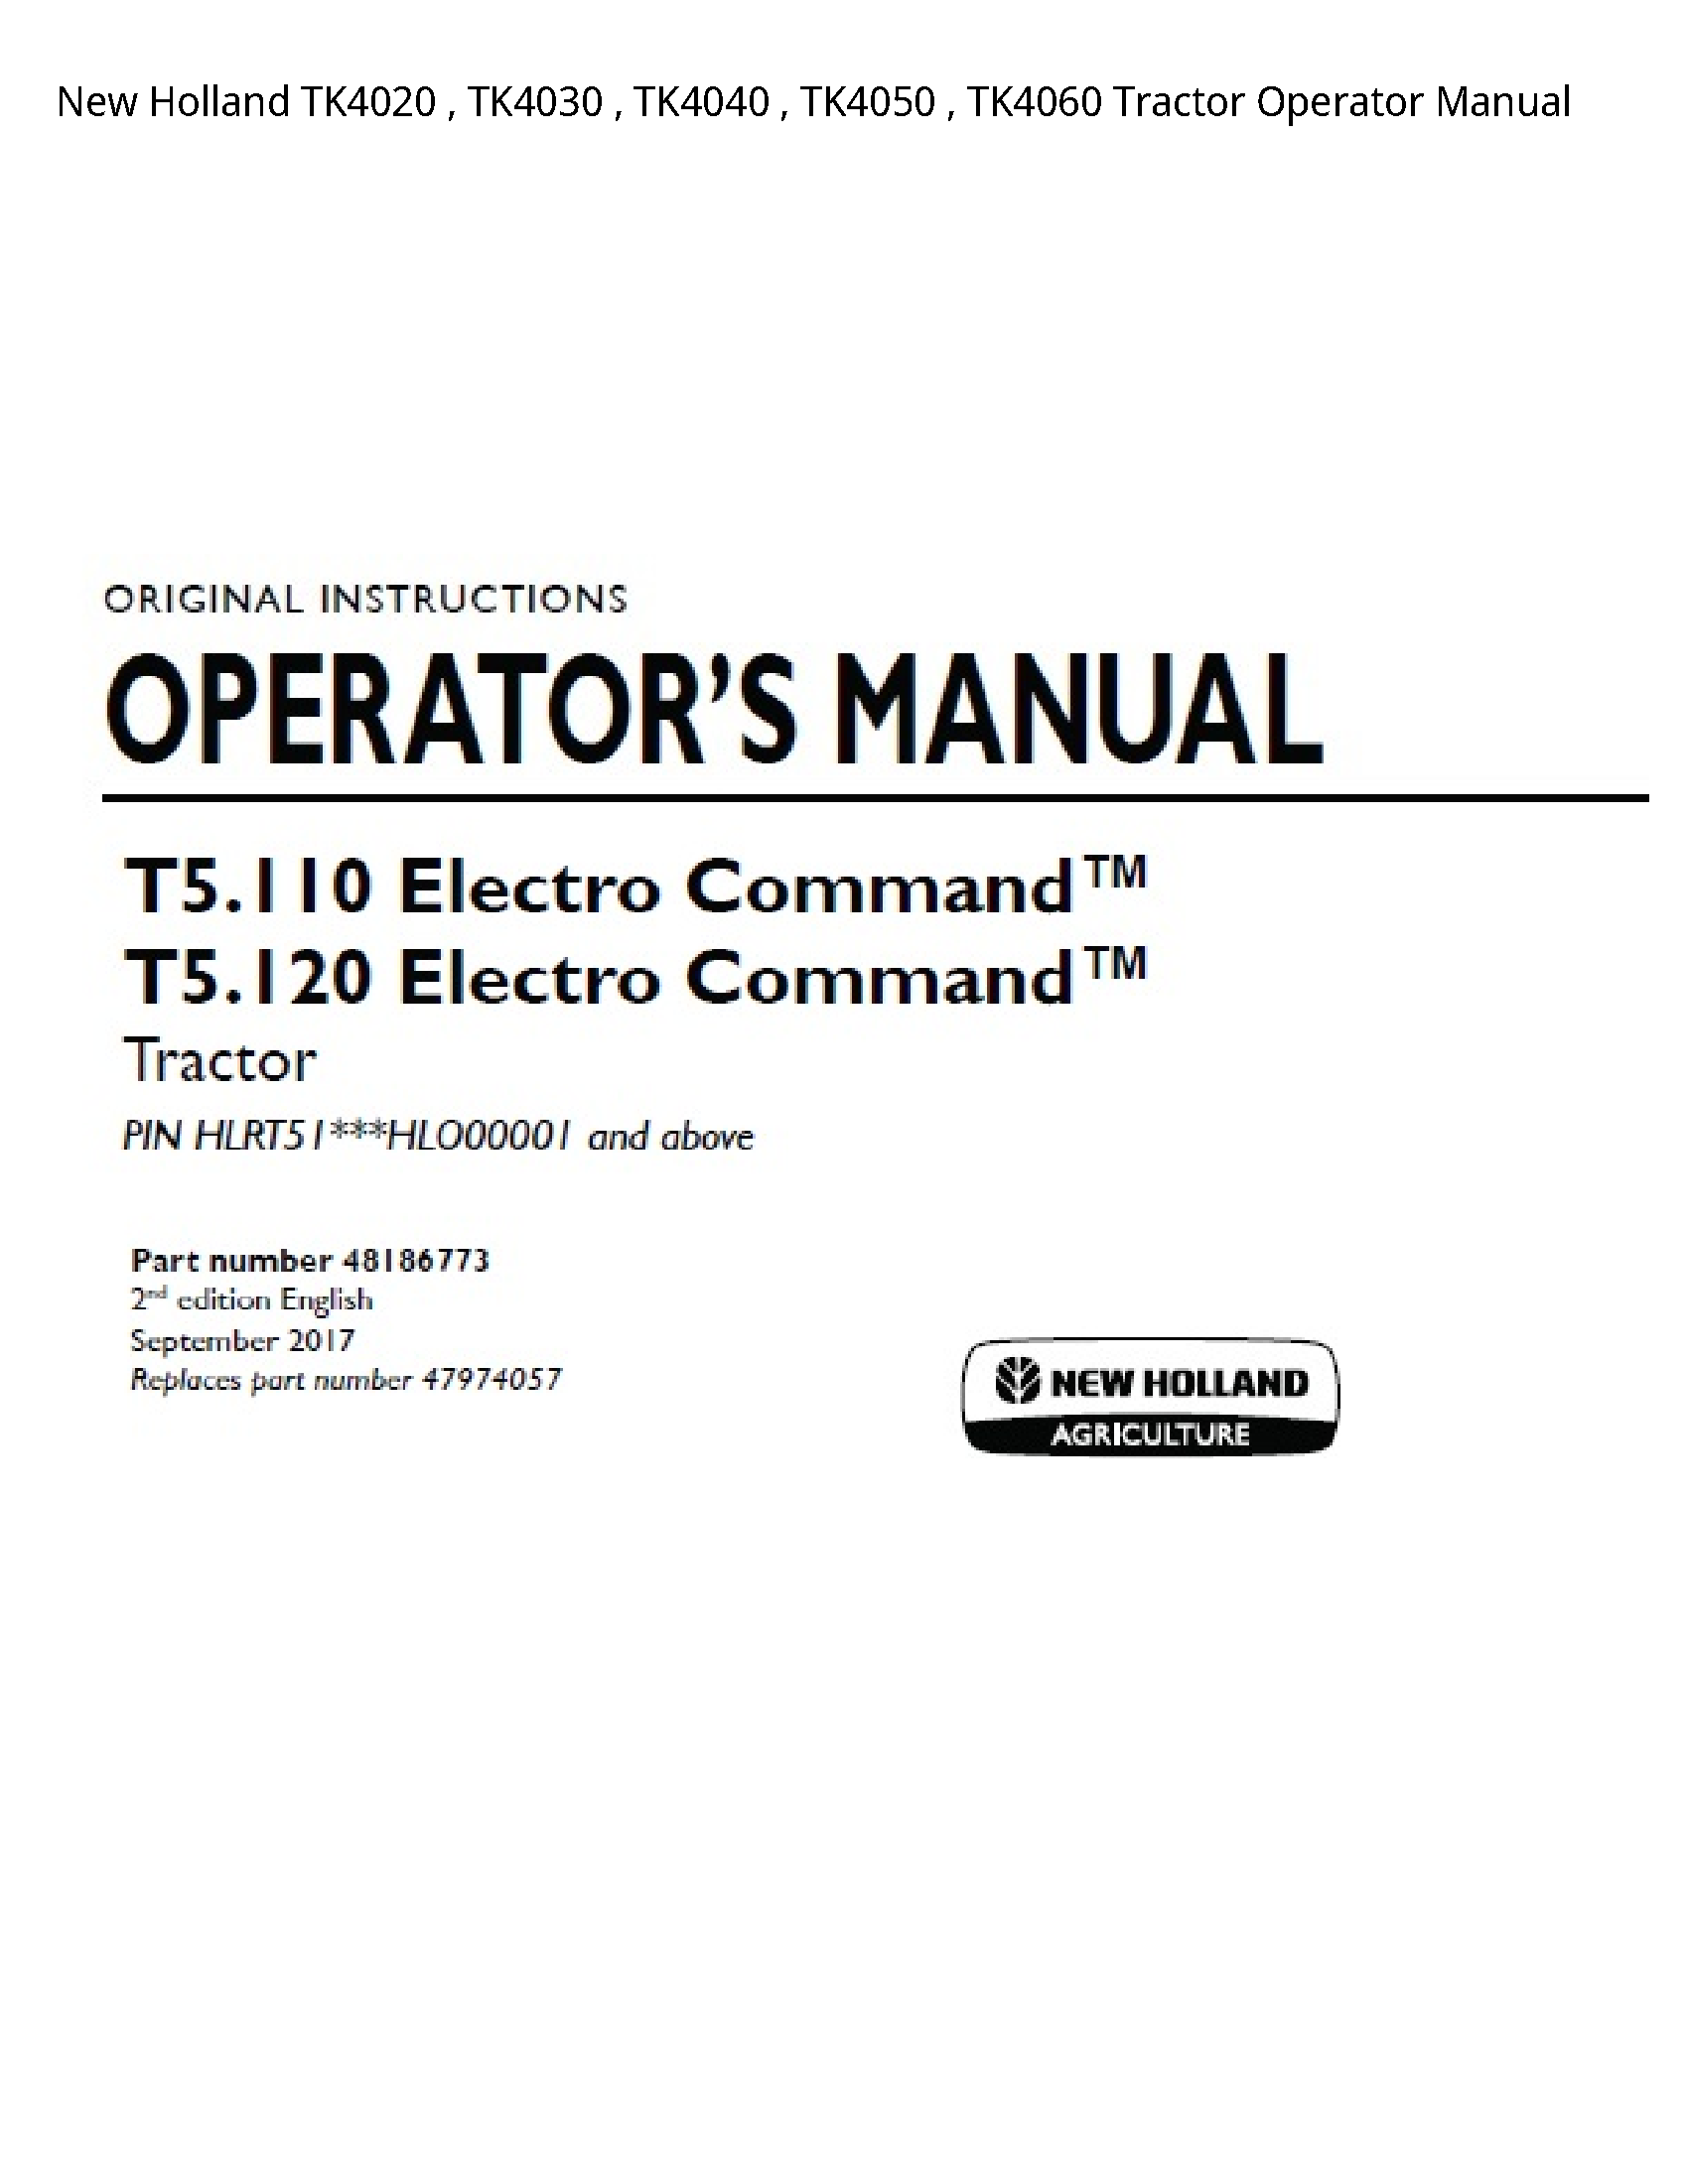 New Holland TK4020 Tractor Operator manual